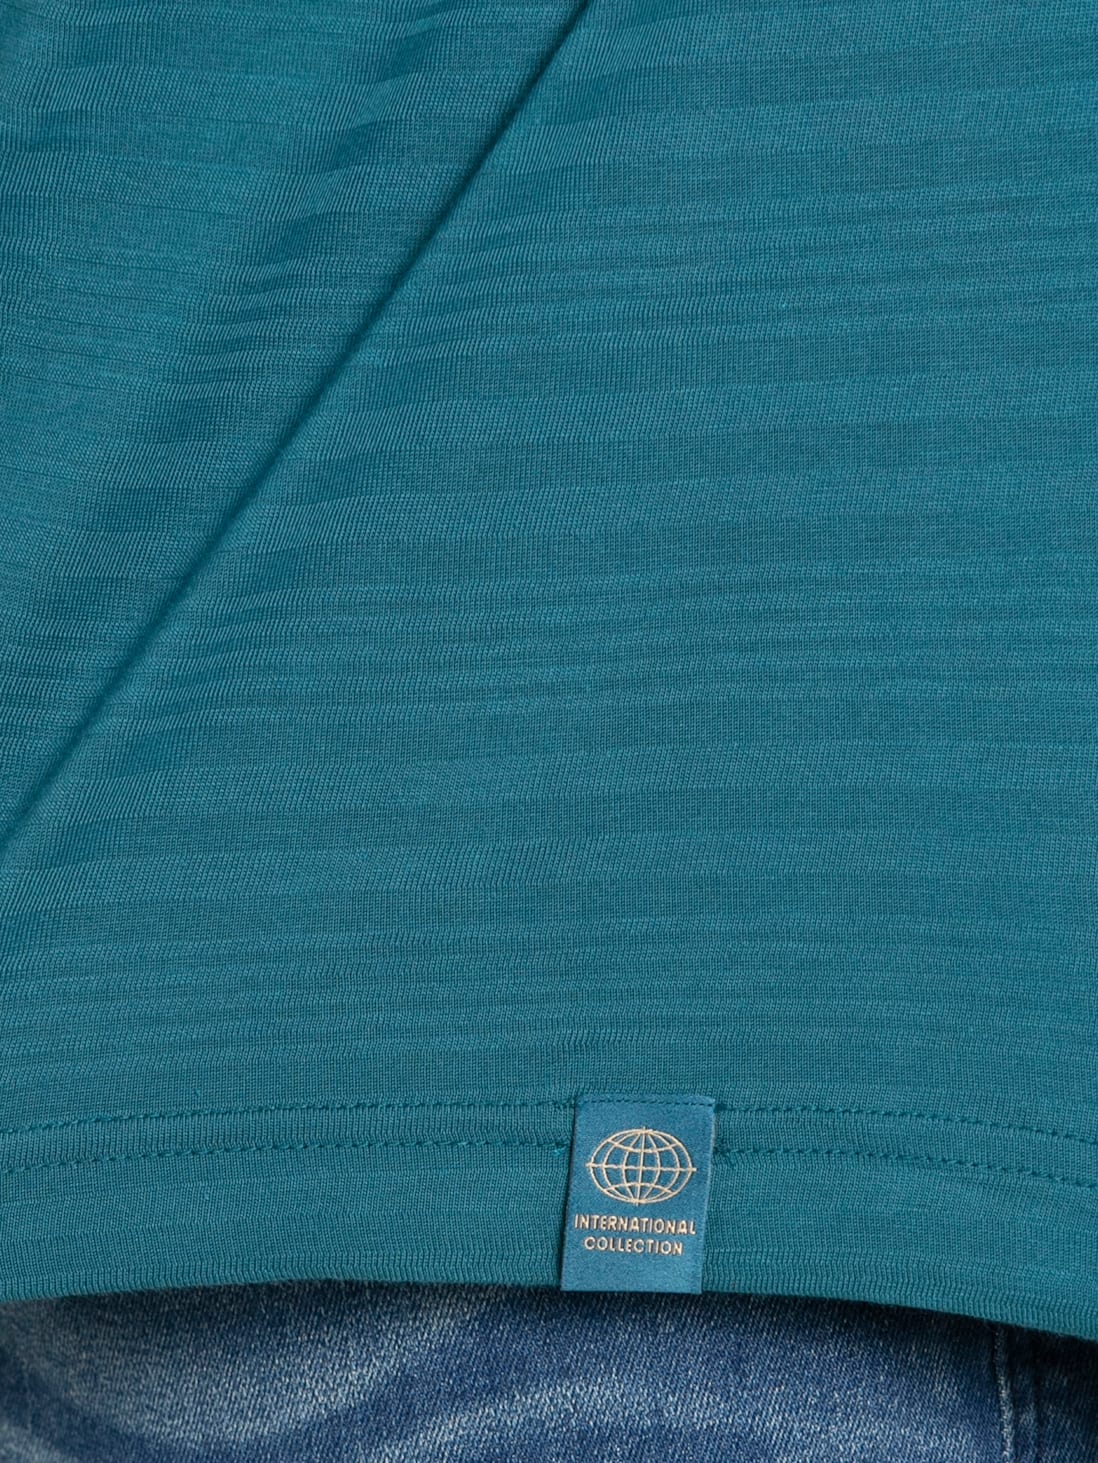 Buy Men's Super Combed Supima Cotton Solid Round Neck Half Sleeve T ...